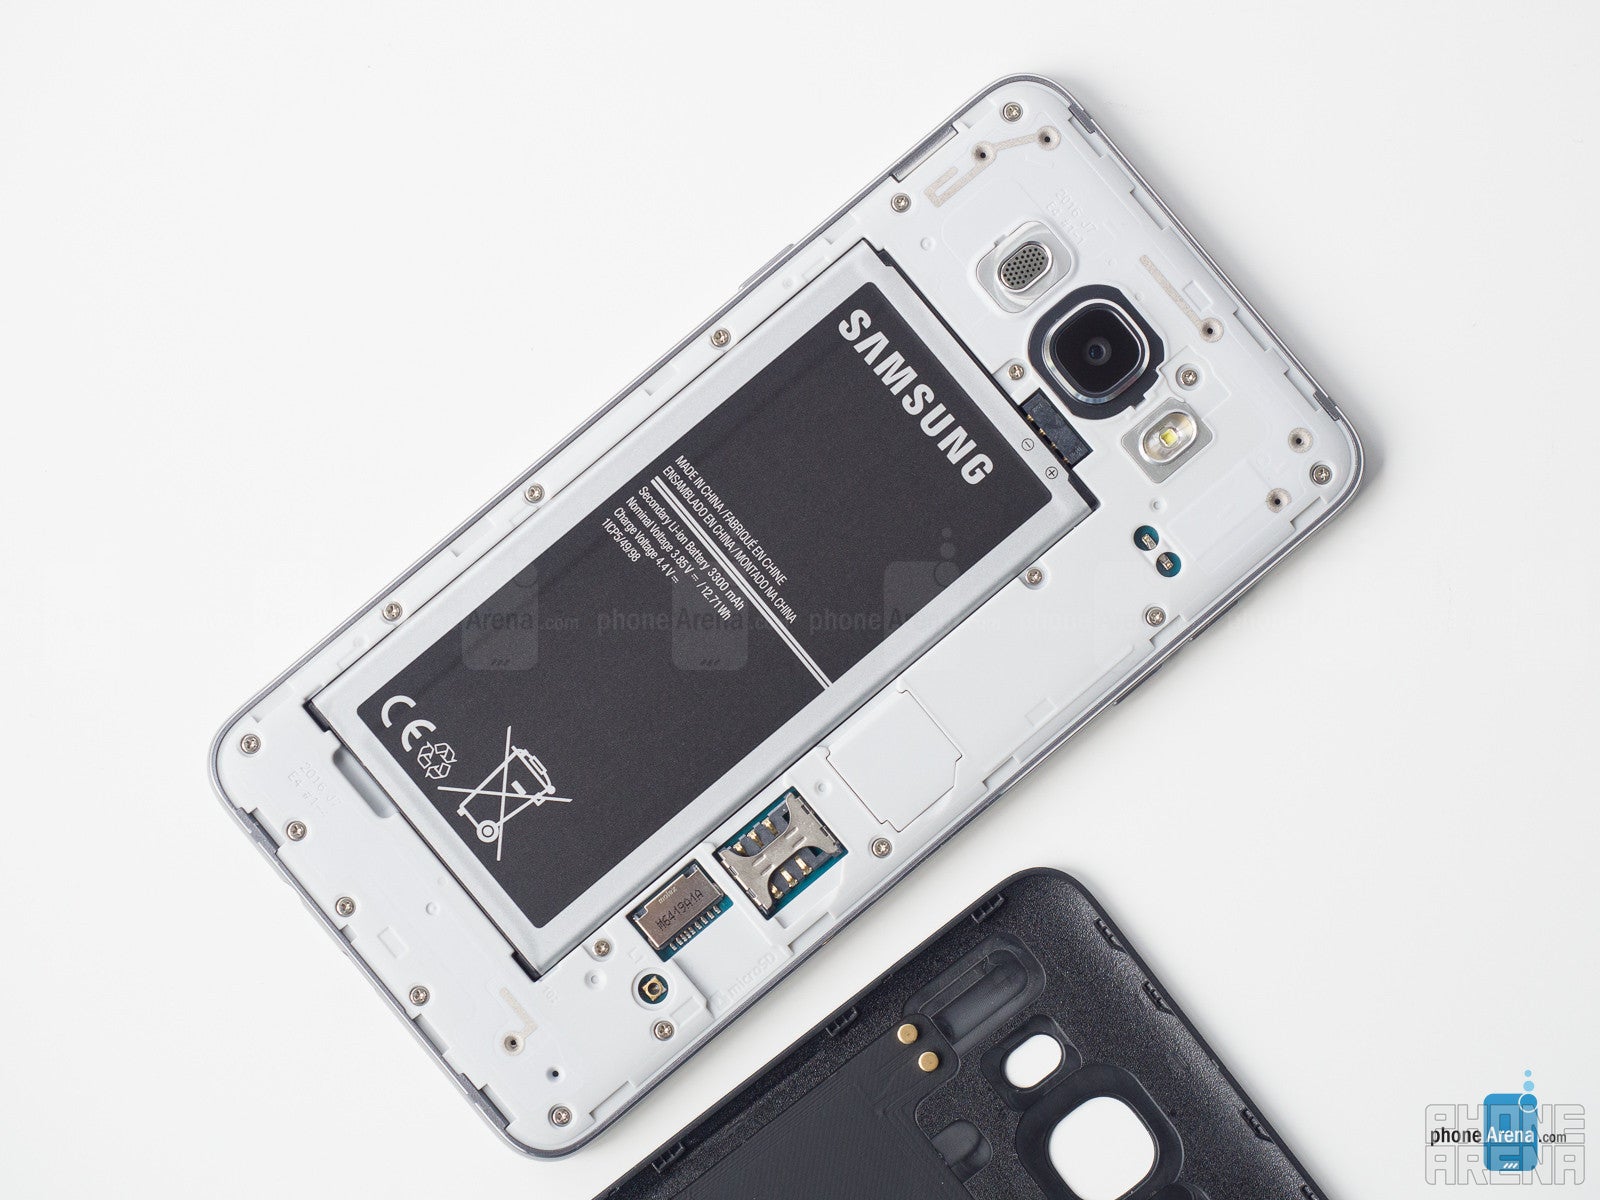 Samsung Galaxy J7 (2016) Review